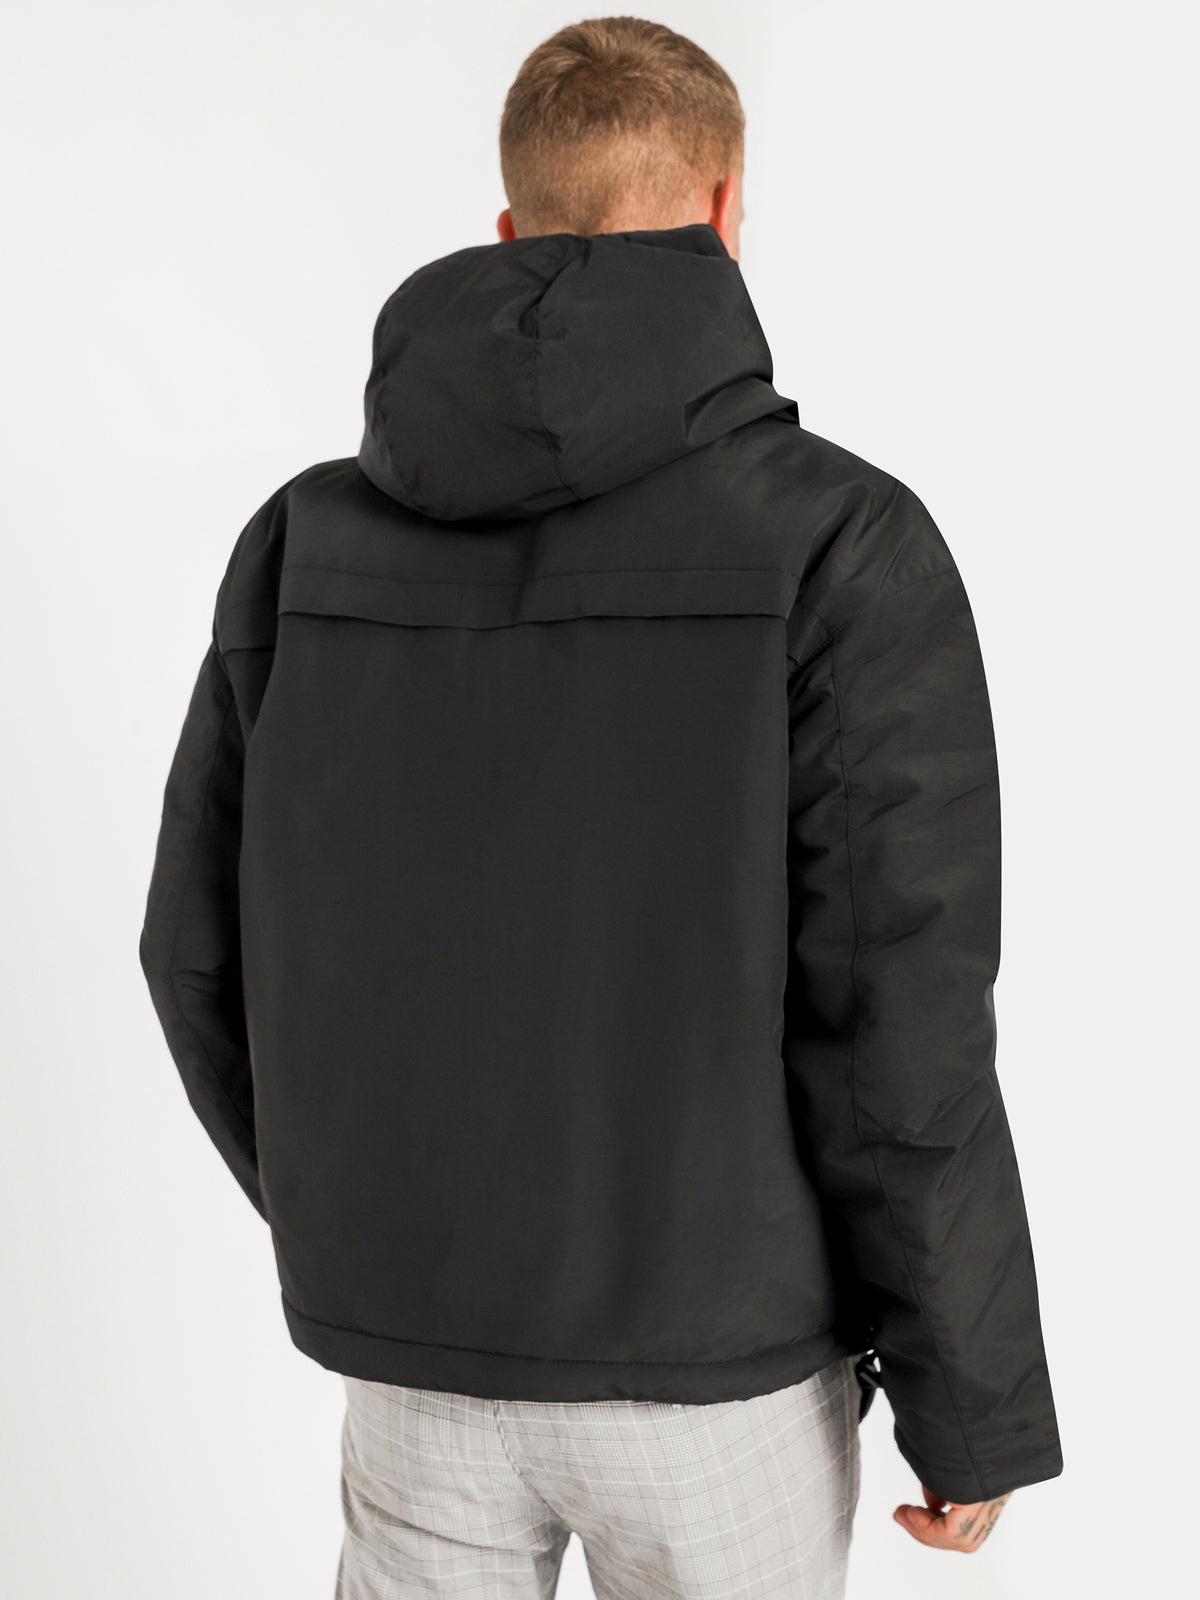 Skidoo Creater Popover Hooded Jacket in Black